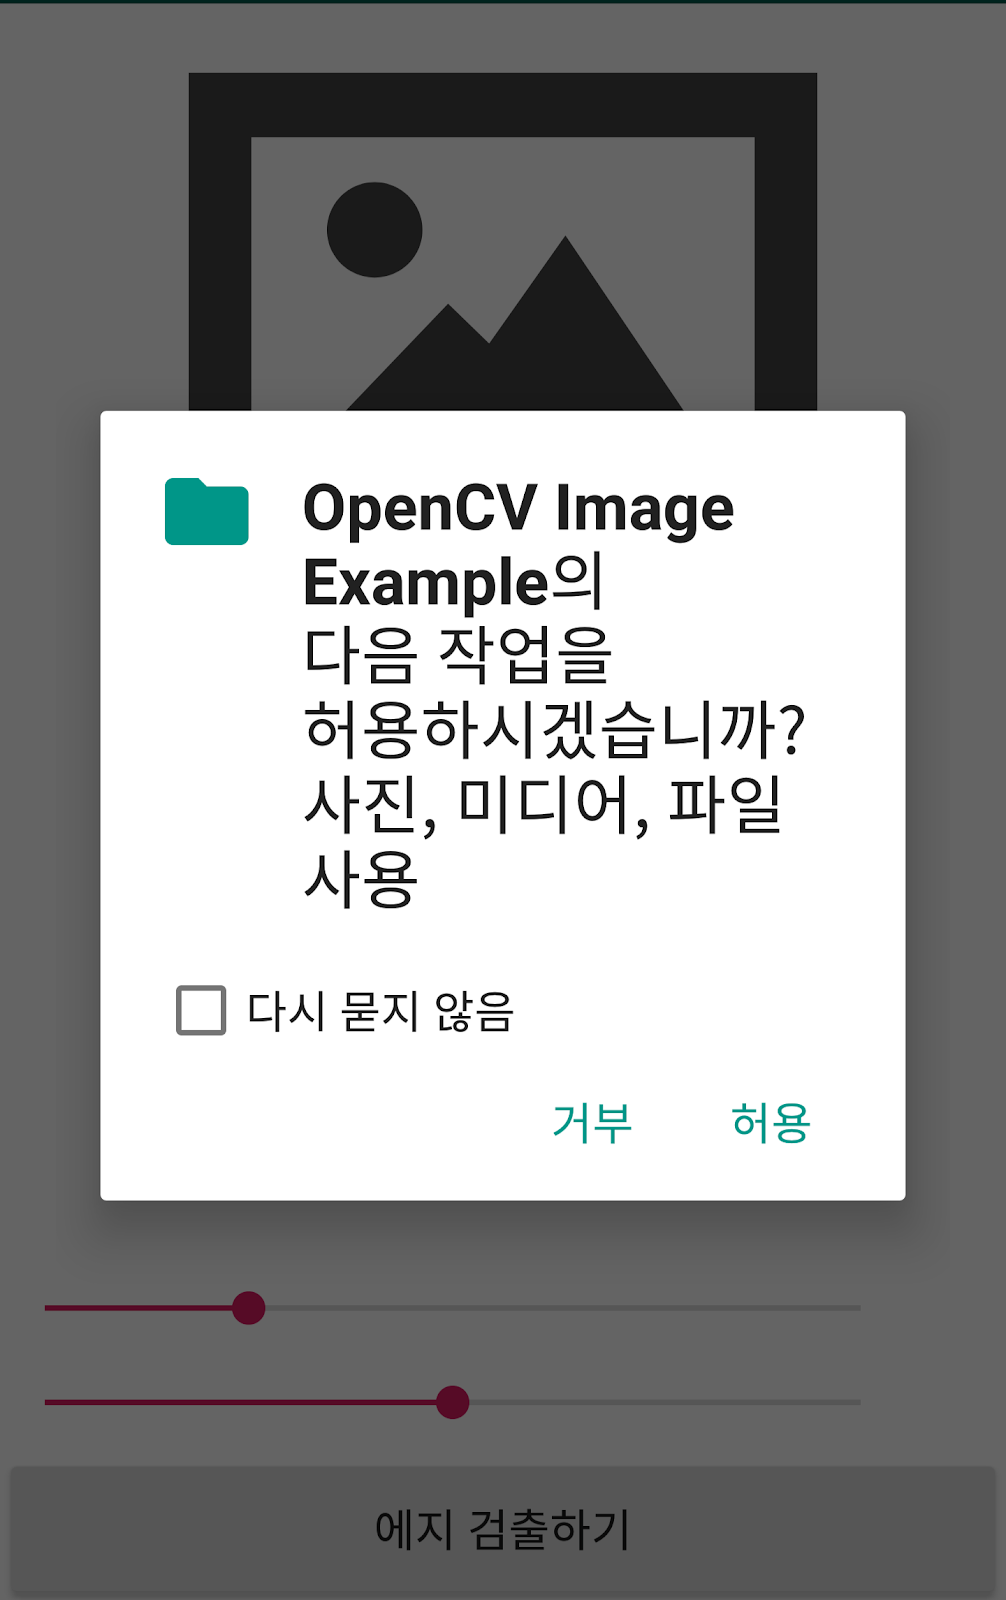 Android NDK + OpenCV 이미지 로드하여 영상처리하는 예제 - 멈춤보단 천천히라도